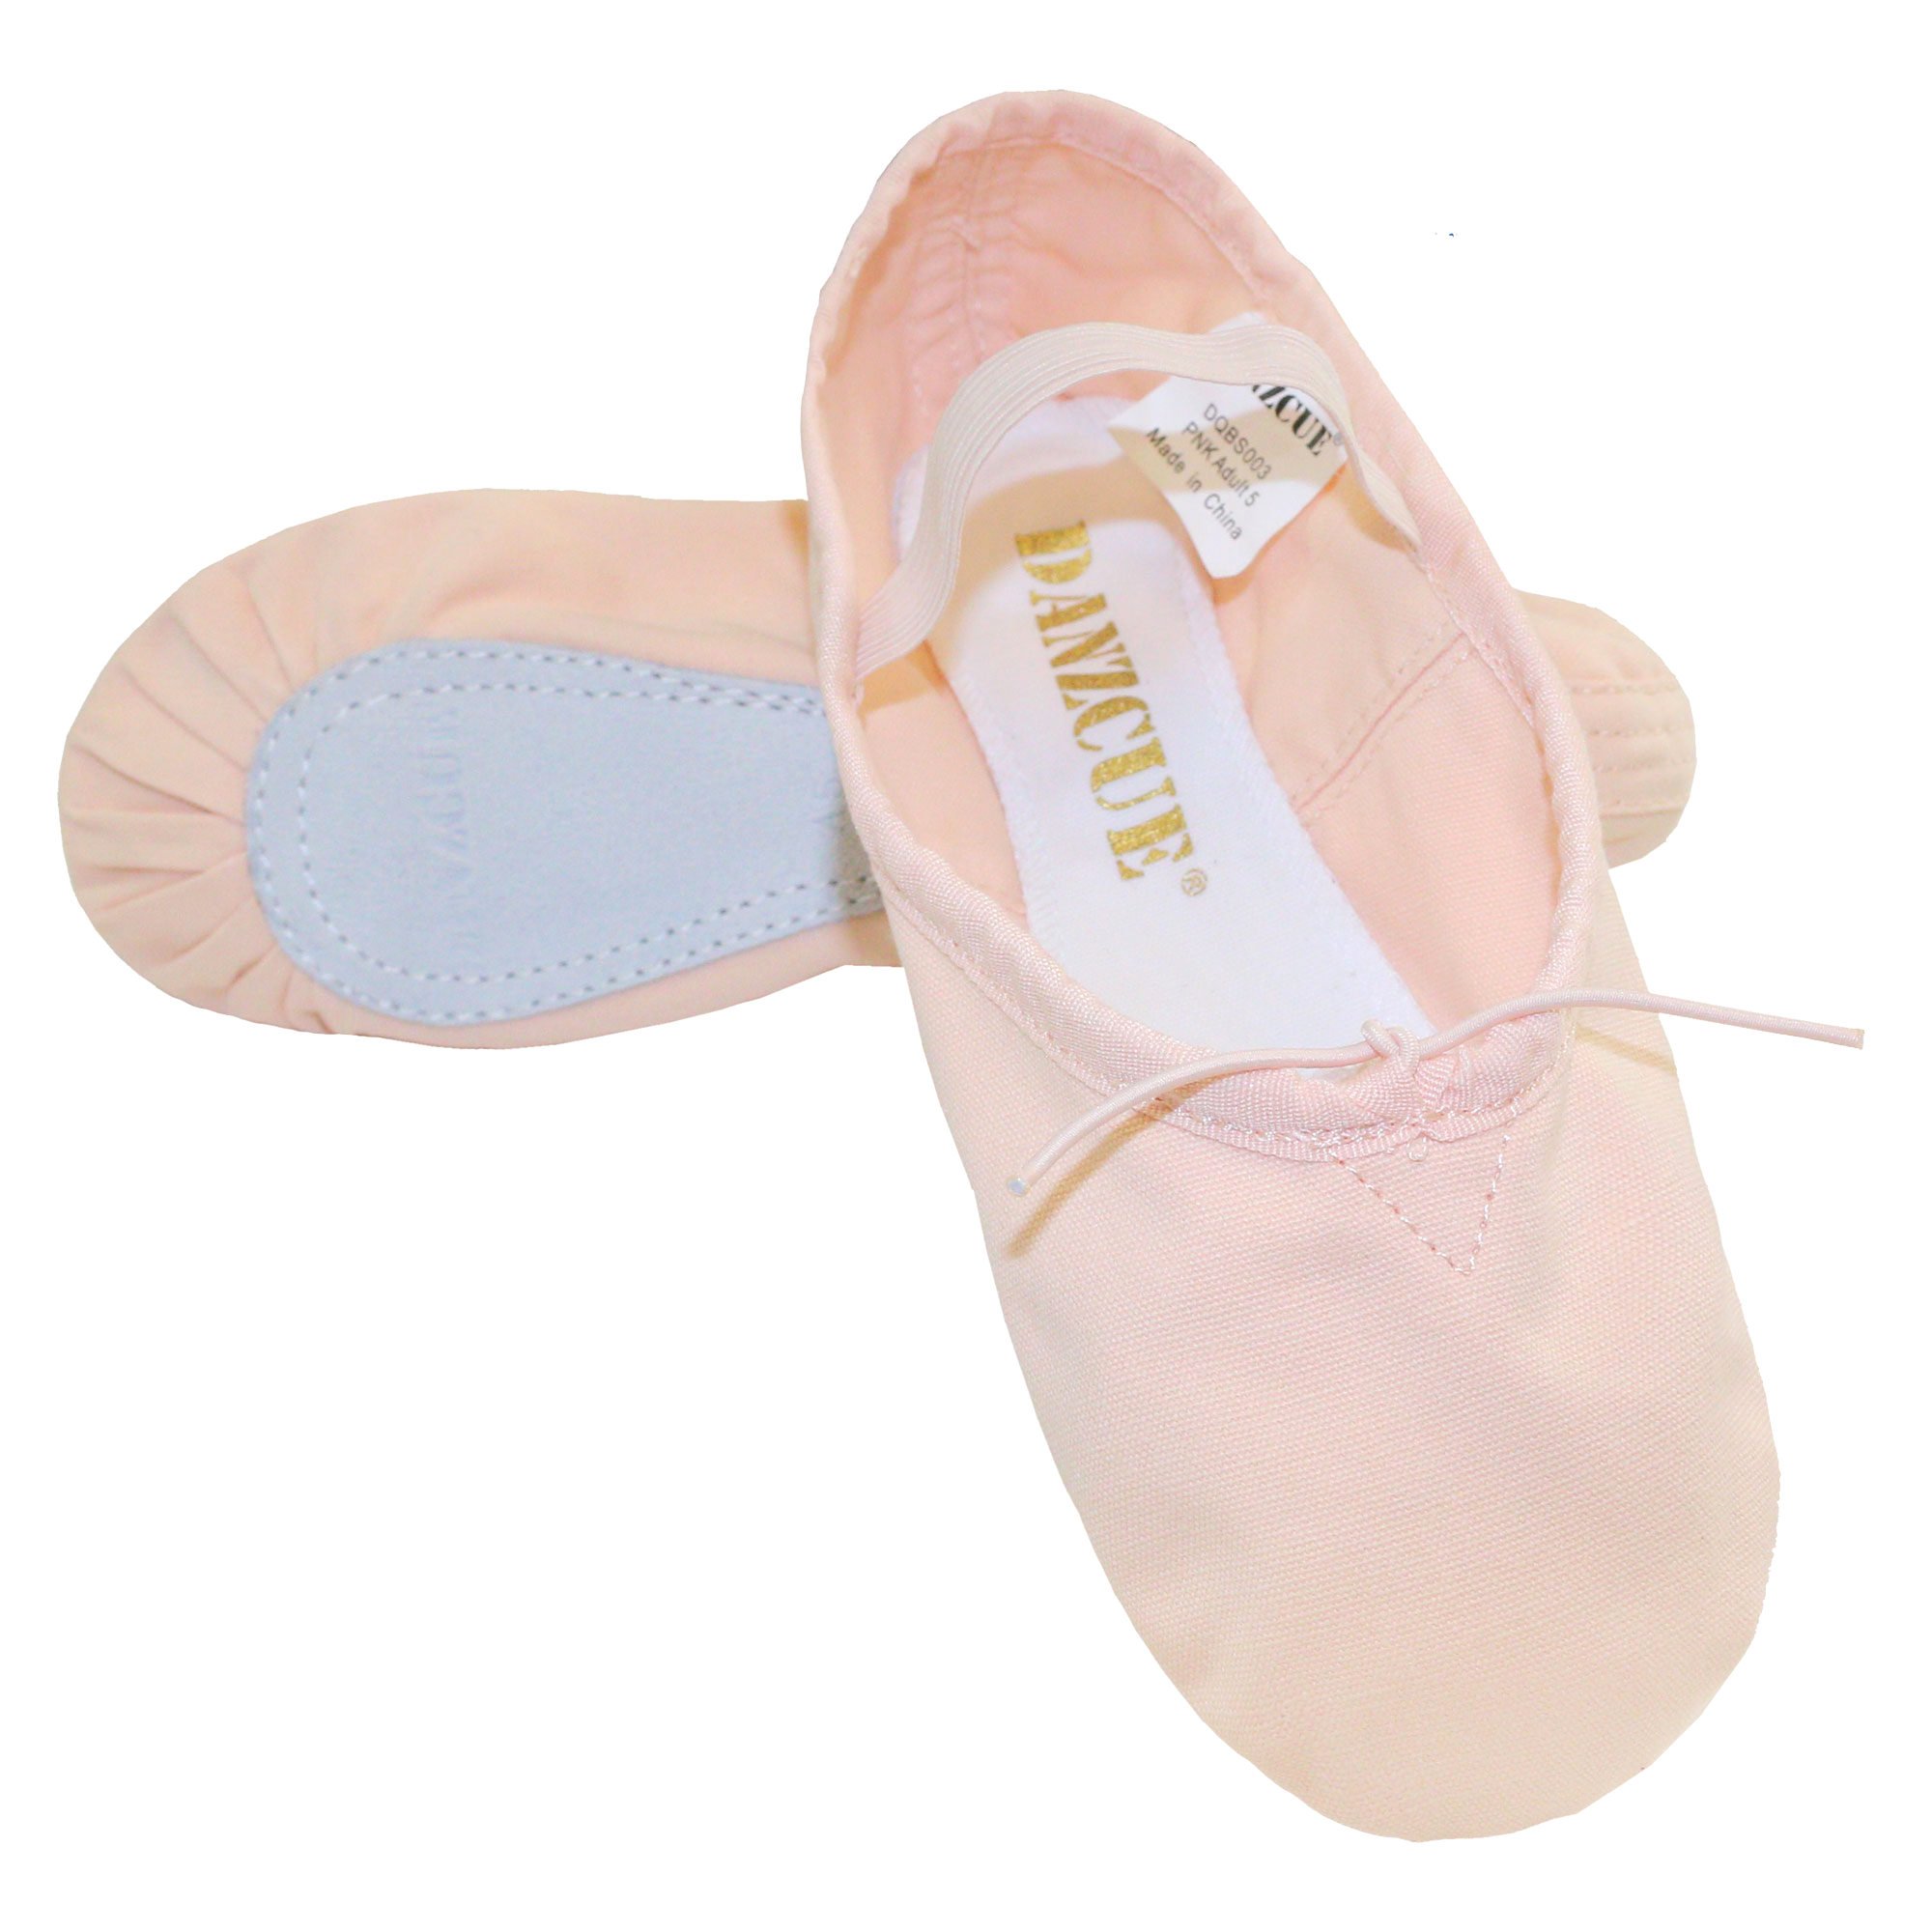 Danzcue Child Full Sole Canvas Ballet Slipper [DQBS003C] - $14.49